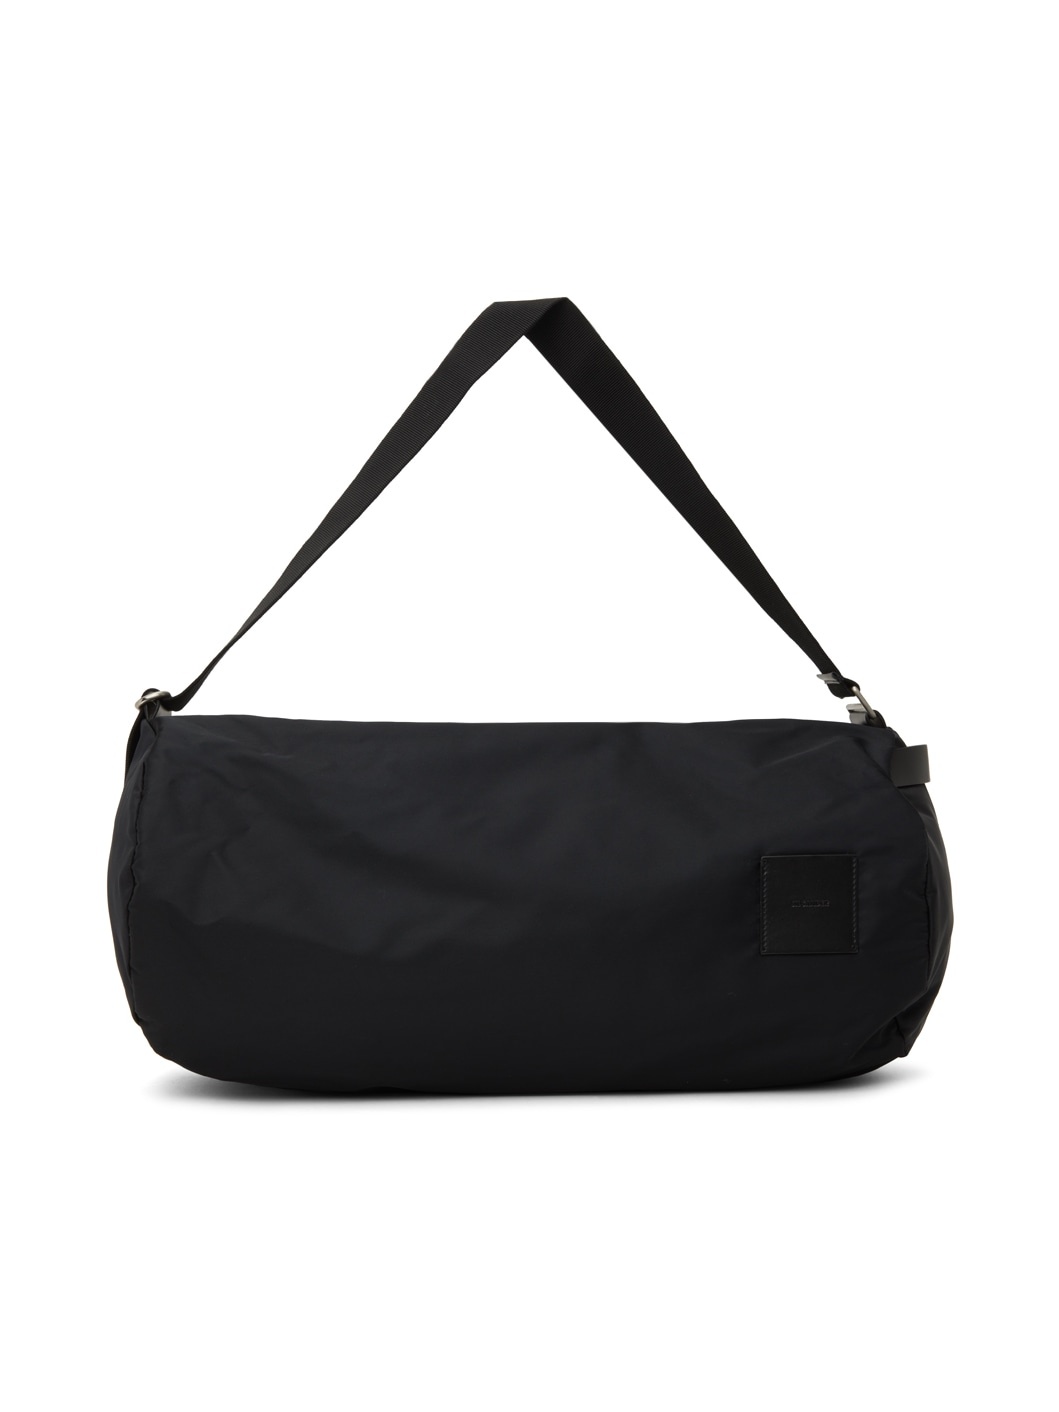 Black Gym Bag - 1